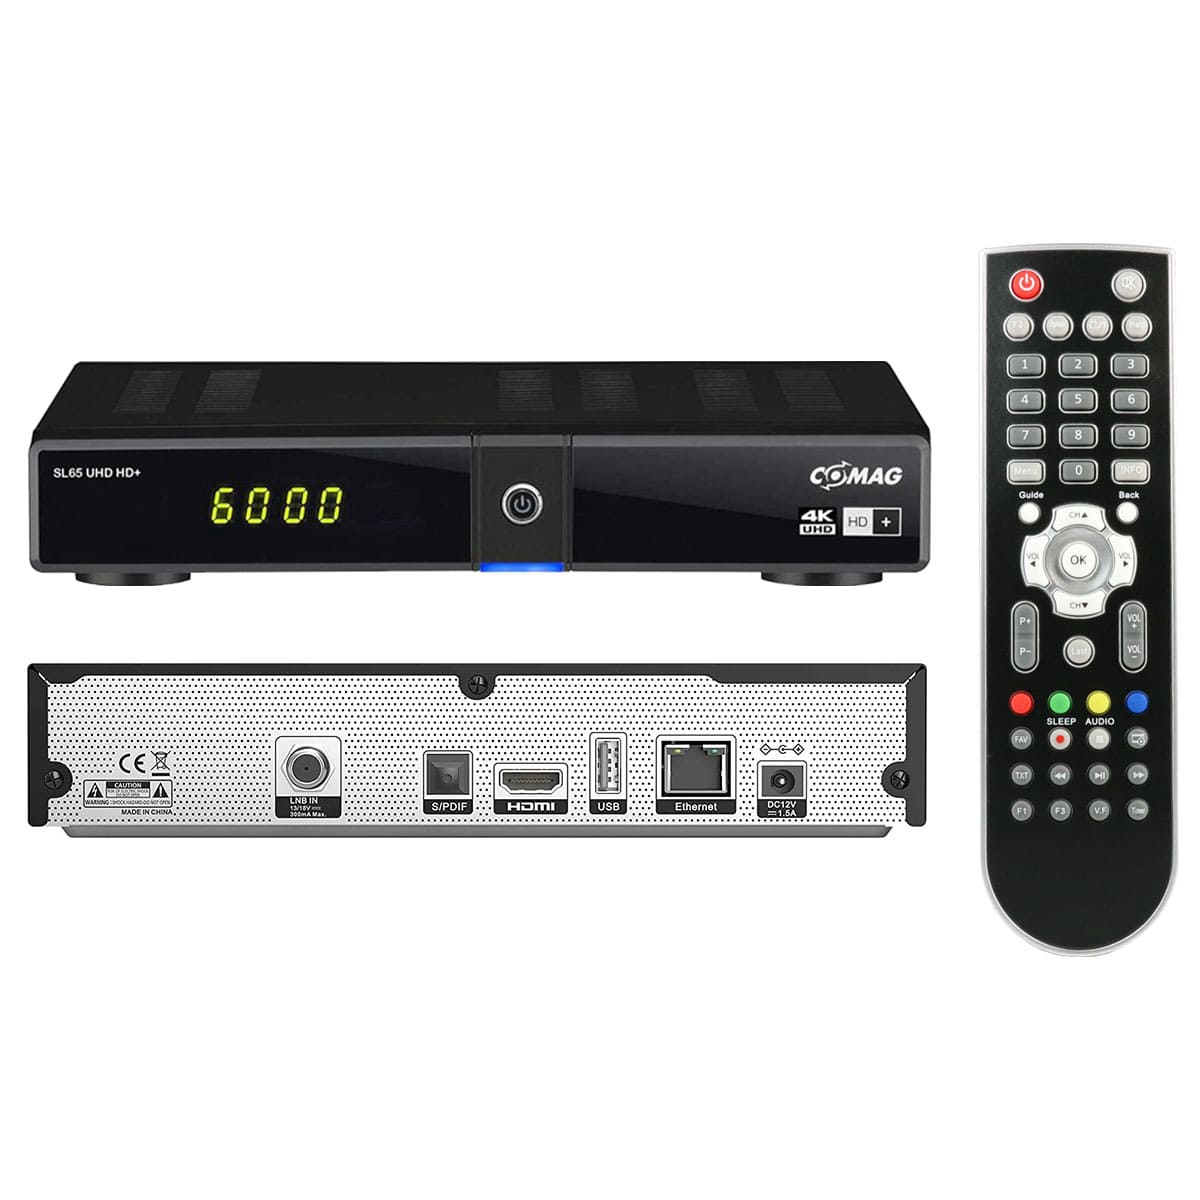 Comag SL65 UHD HD+ Sat Receiver inkl. 6 Monate HD Plus (4K UHD, DVB-S2, HDMI, USB 3.0, Schwarz)